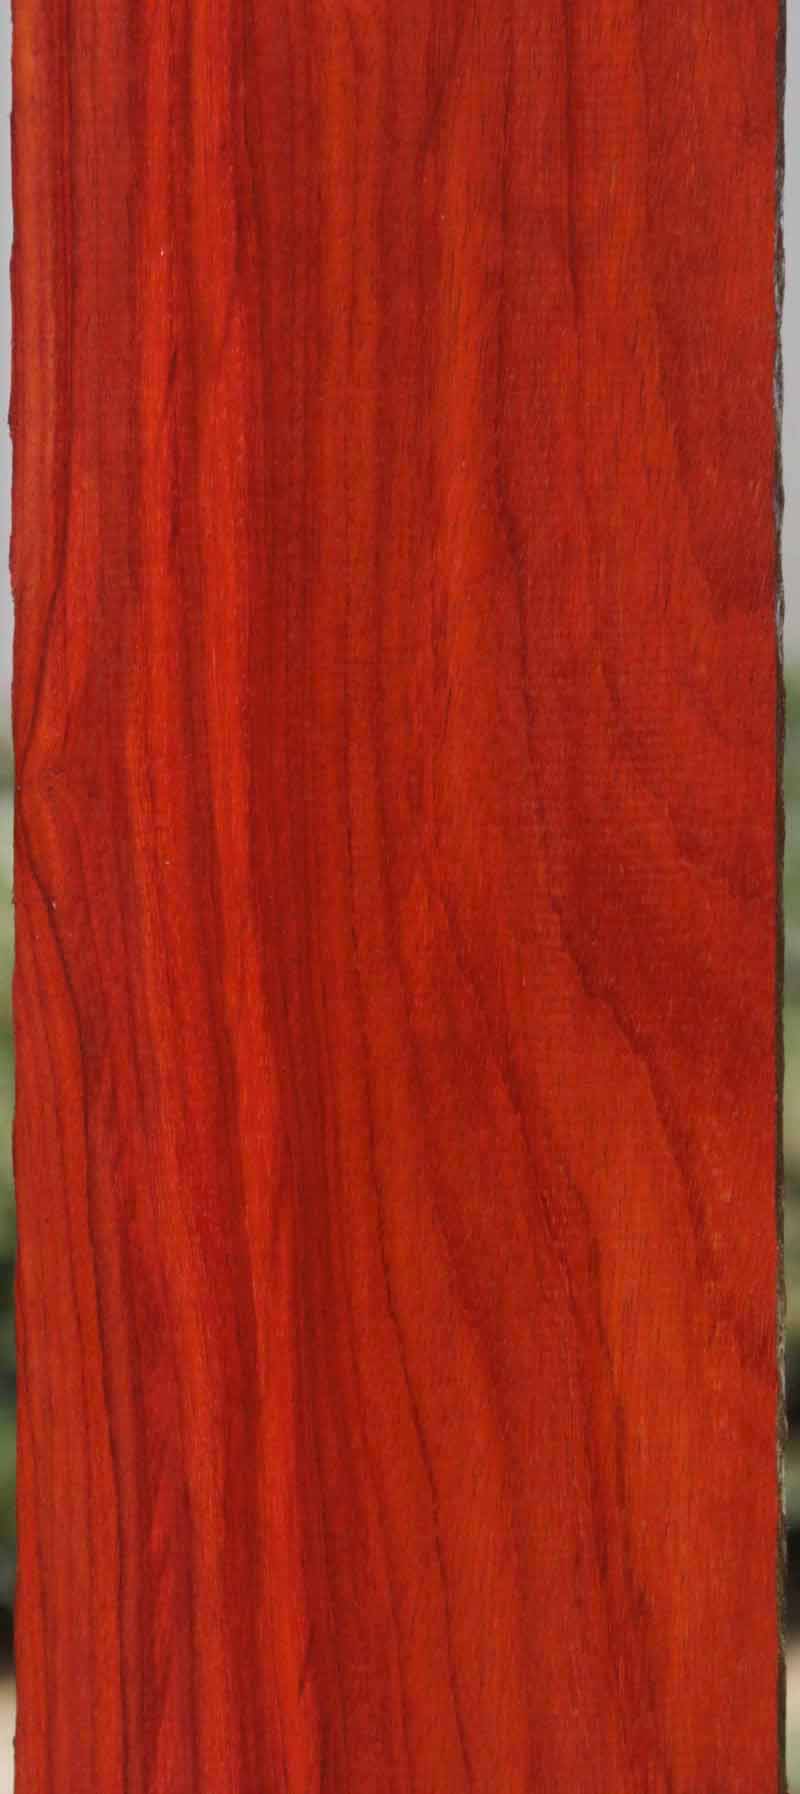 African Padauk Lumber - SOLD